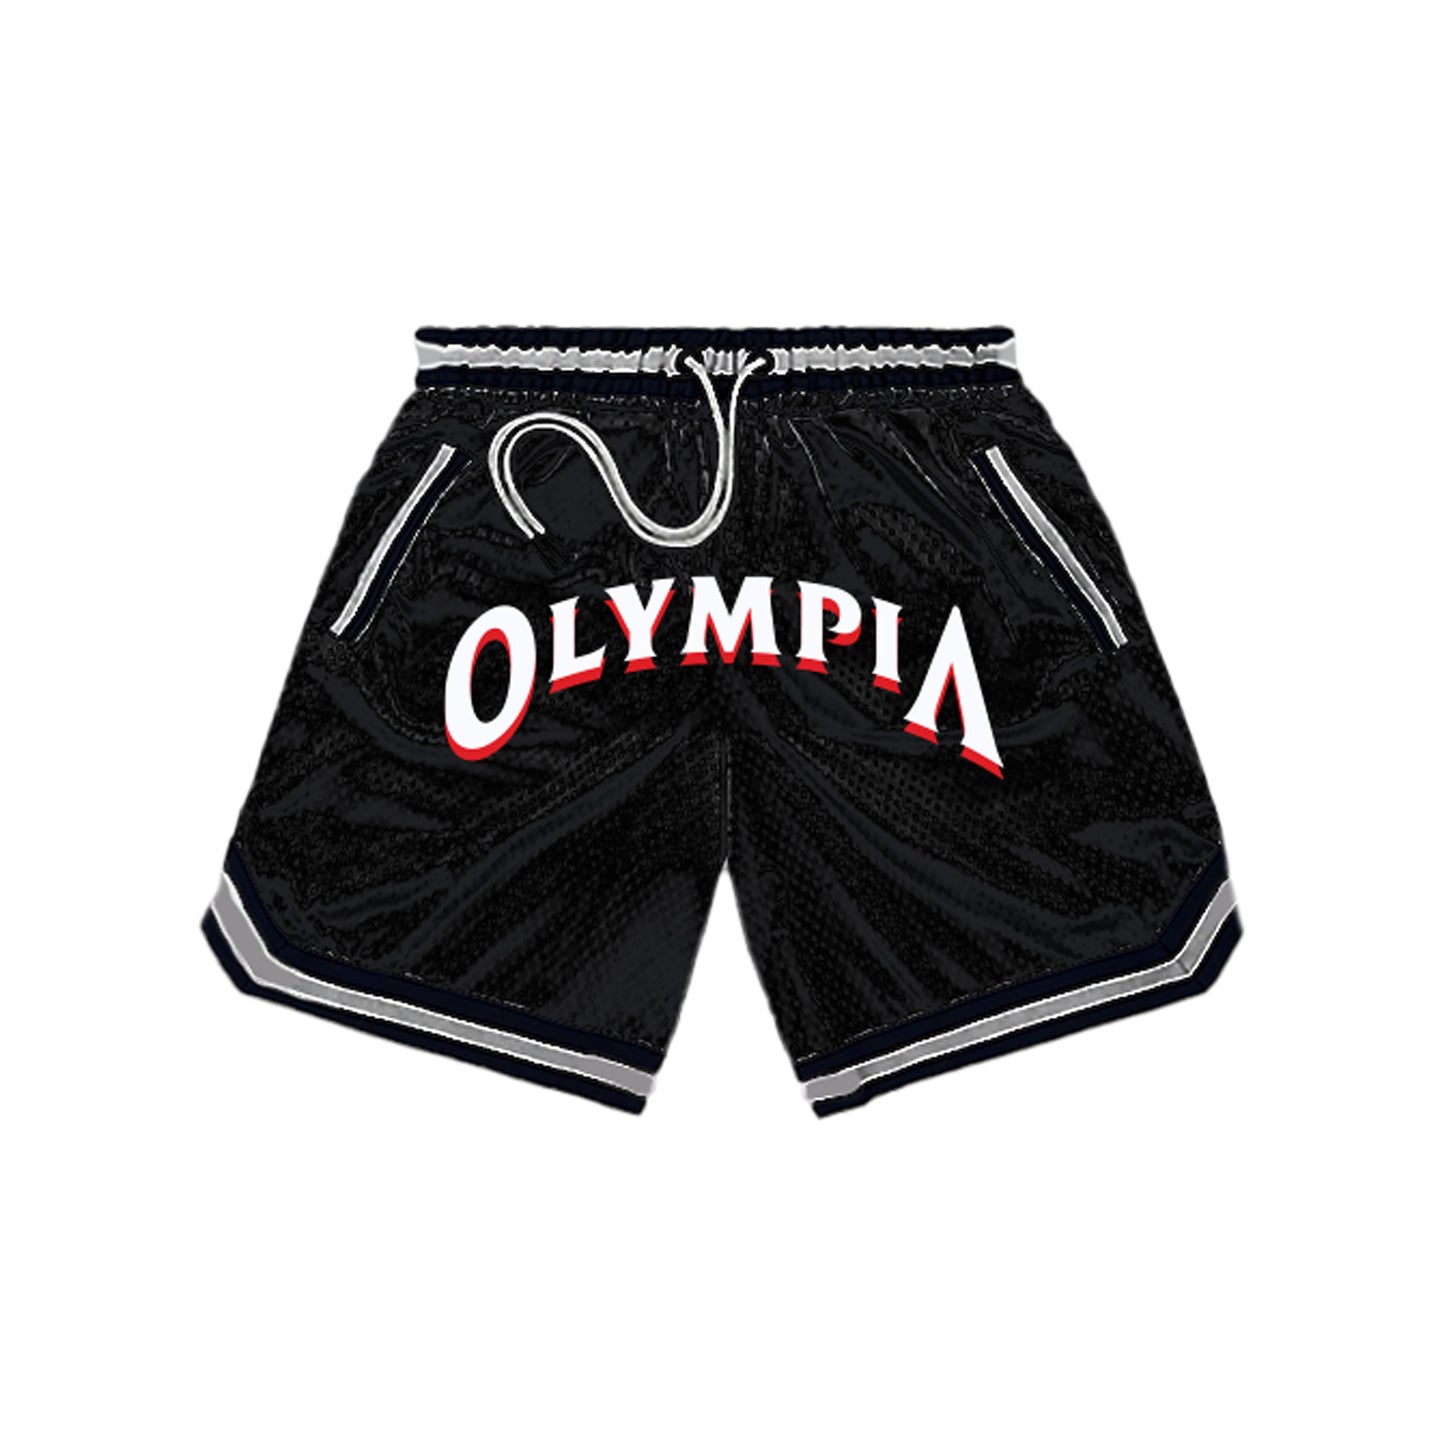 Olympia Basketball Shorts Black